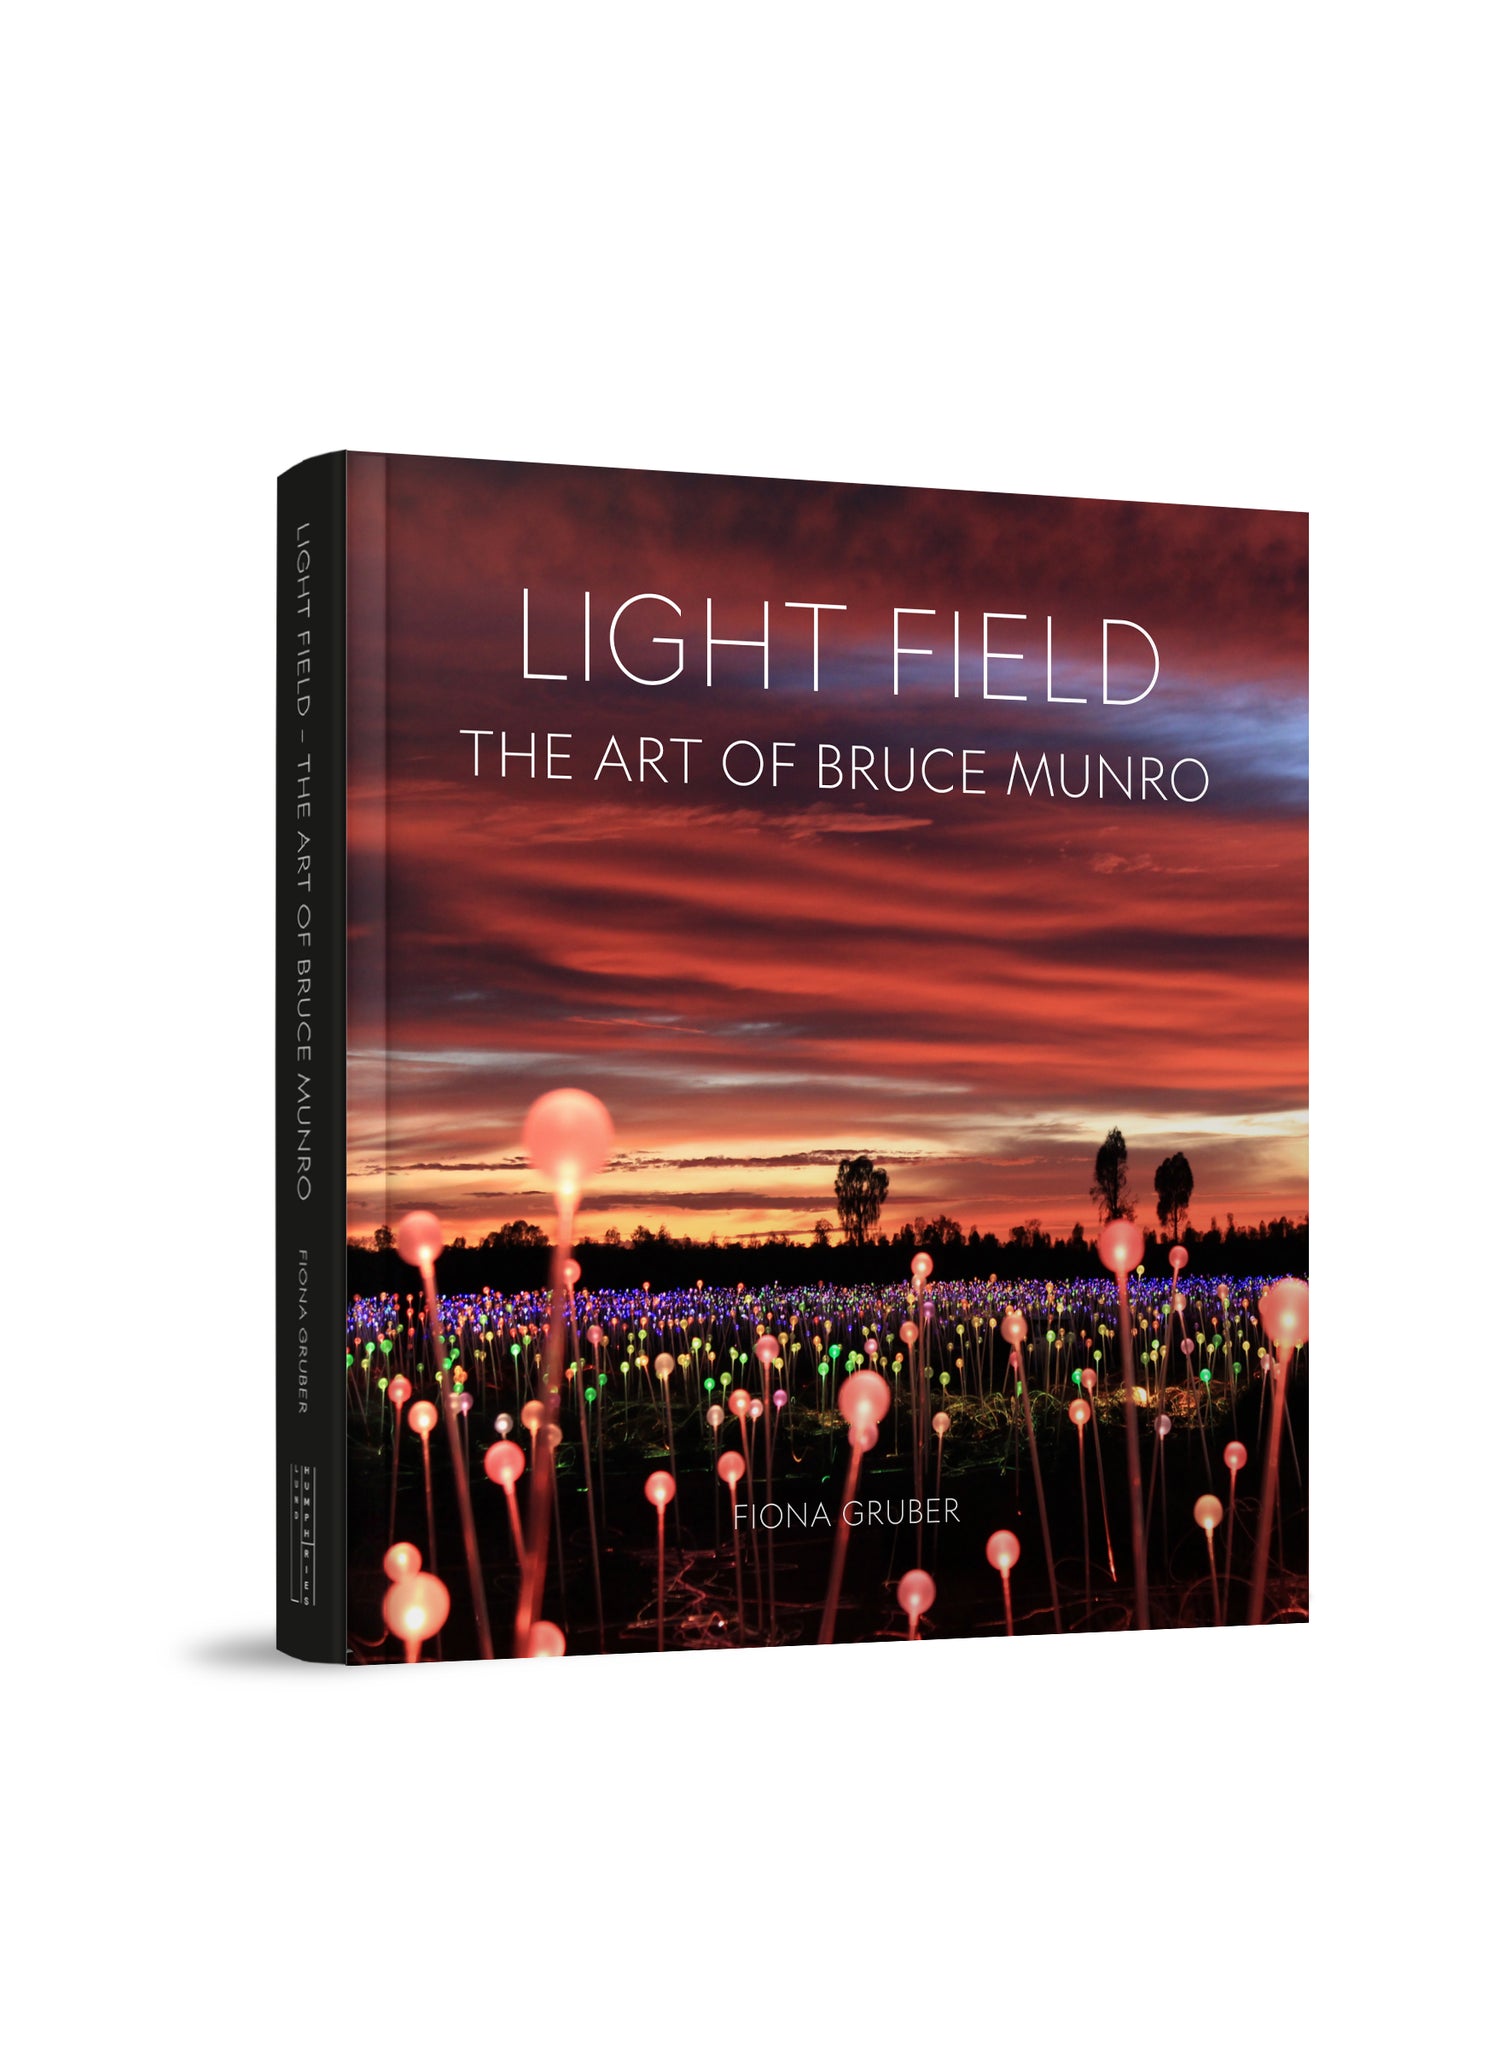 Light Field, The Art of Bruce Munro - Fiona Gruber